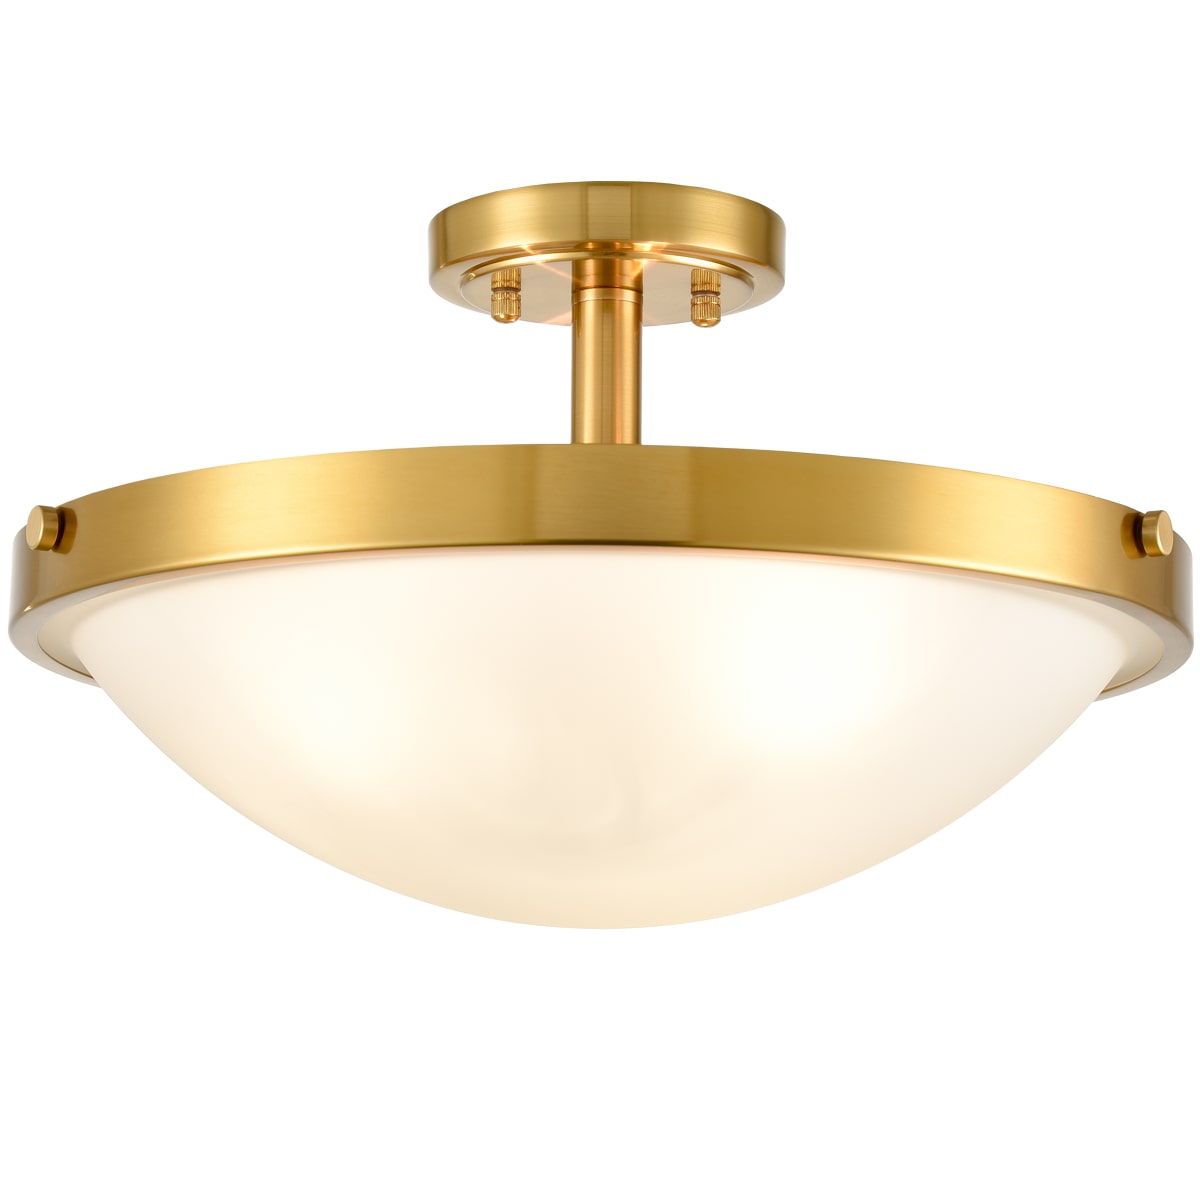 Brass Semi Flush Ceiling Light 3-Light Glass Ceiling Light Fixture